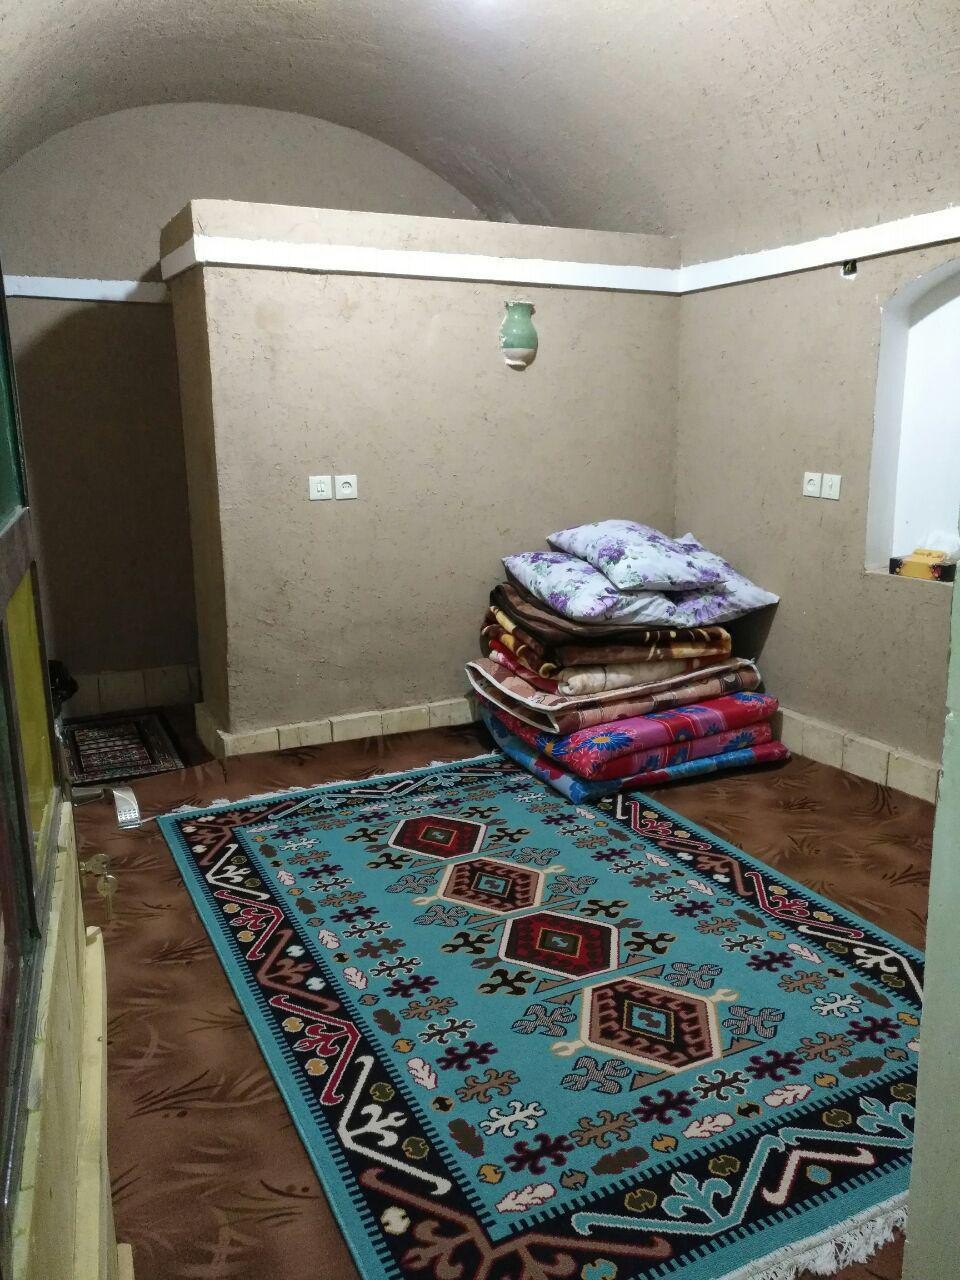 Desert اجاره اقامتگاه سنتی در کردآباد طبس - اتاق 1 